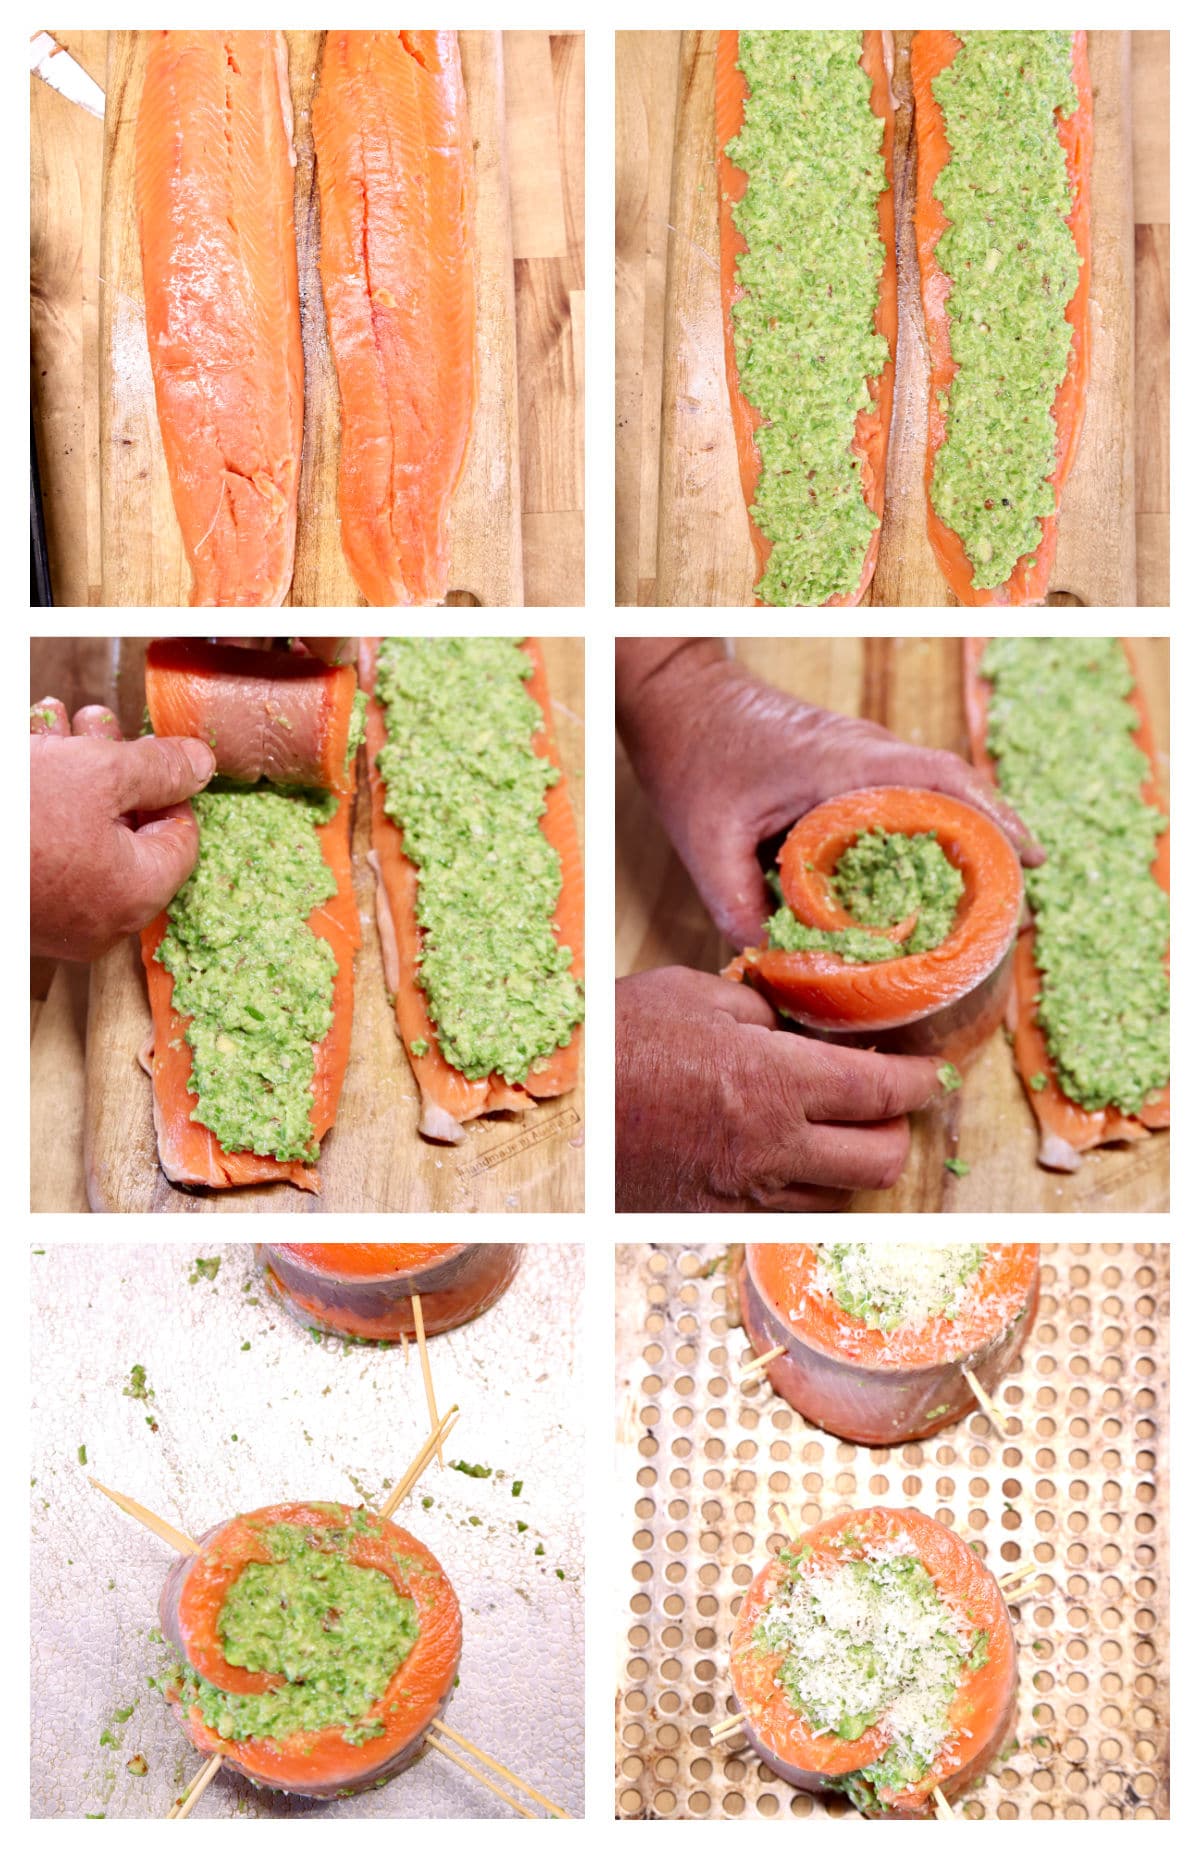 Making salmon rolls with asparagus pesto.